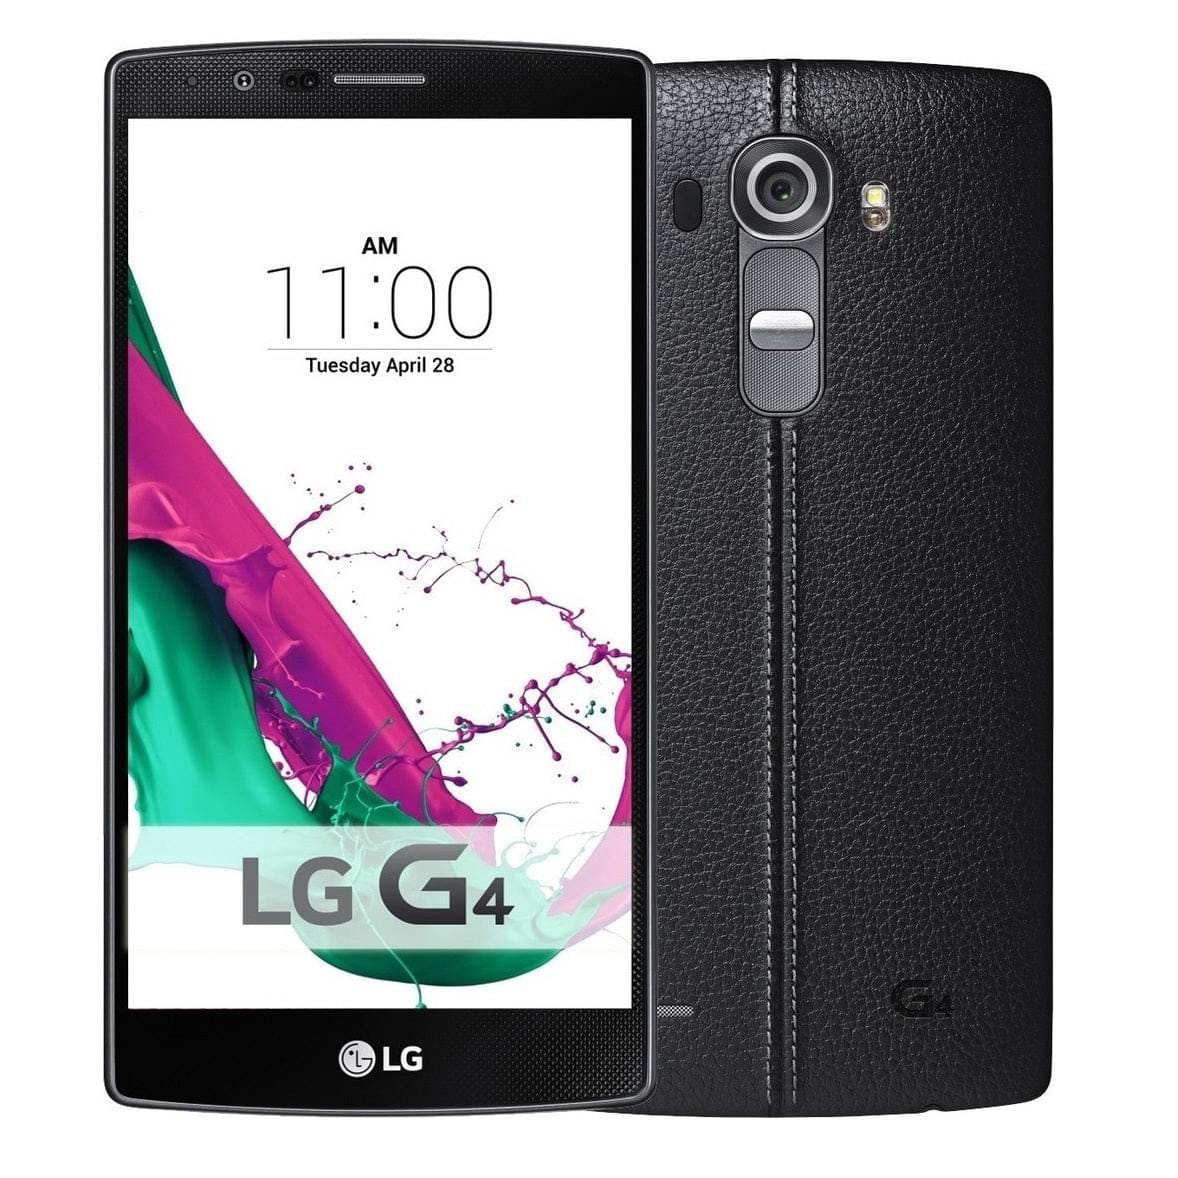 LG G4 - 32 GB - Black Leather - Tmobile - GSM